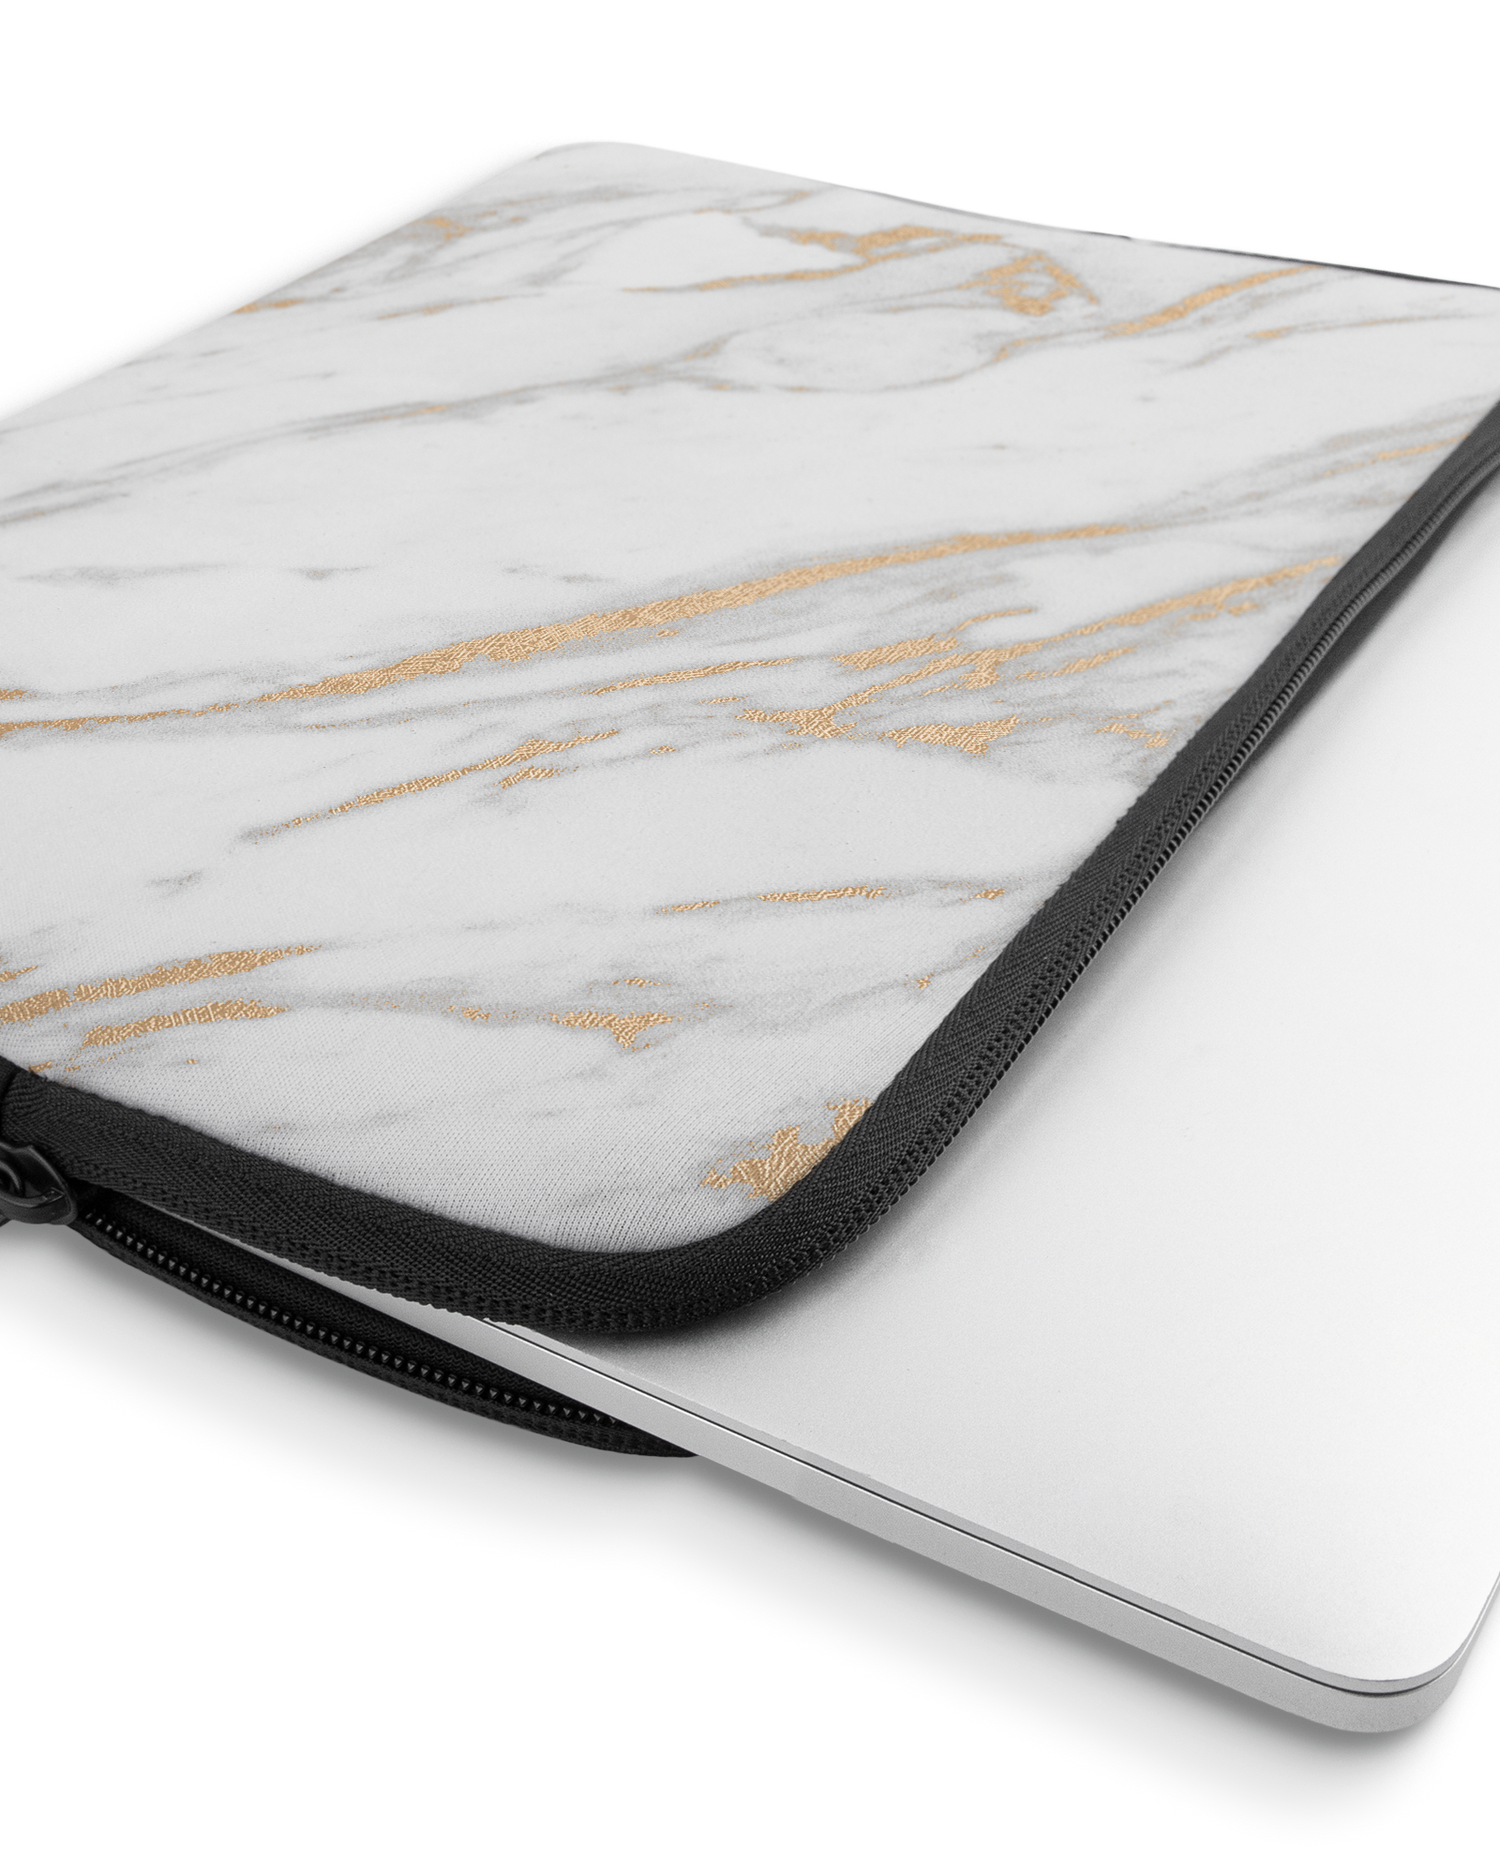 Gold Marble Elegance Laptophülle 16 Zoll mit Gerät im Inneren